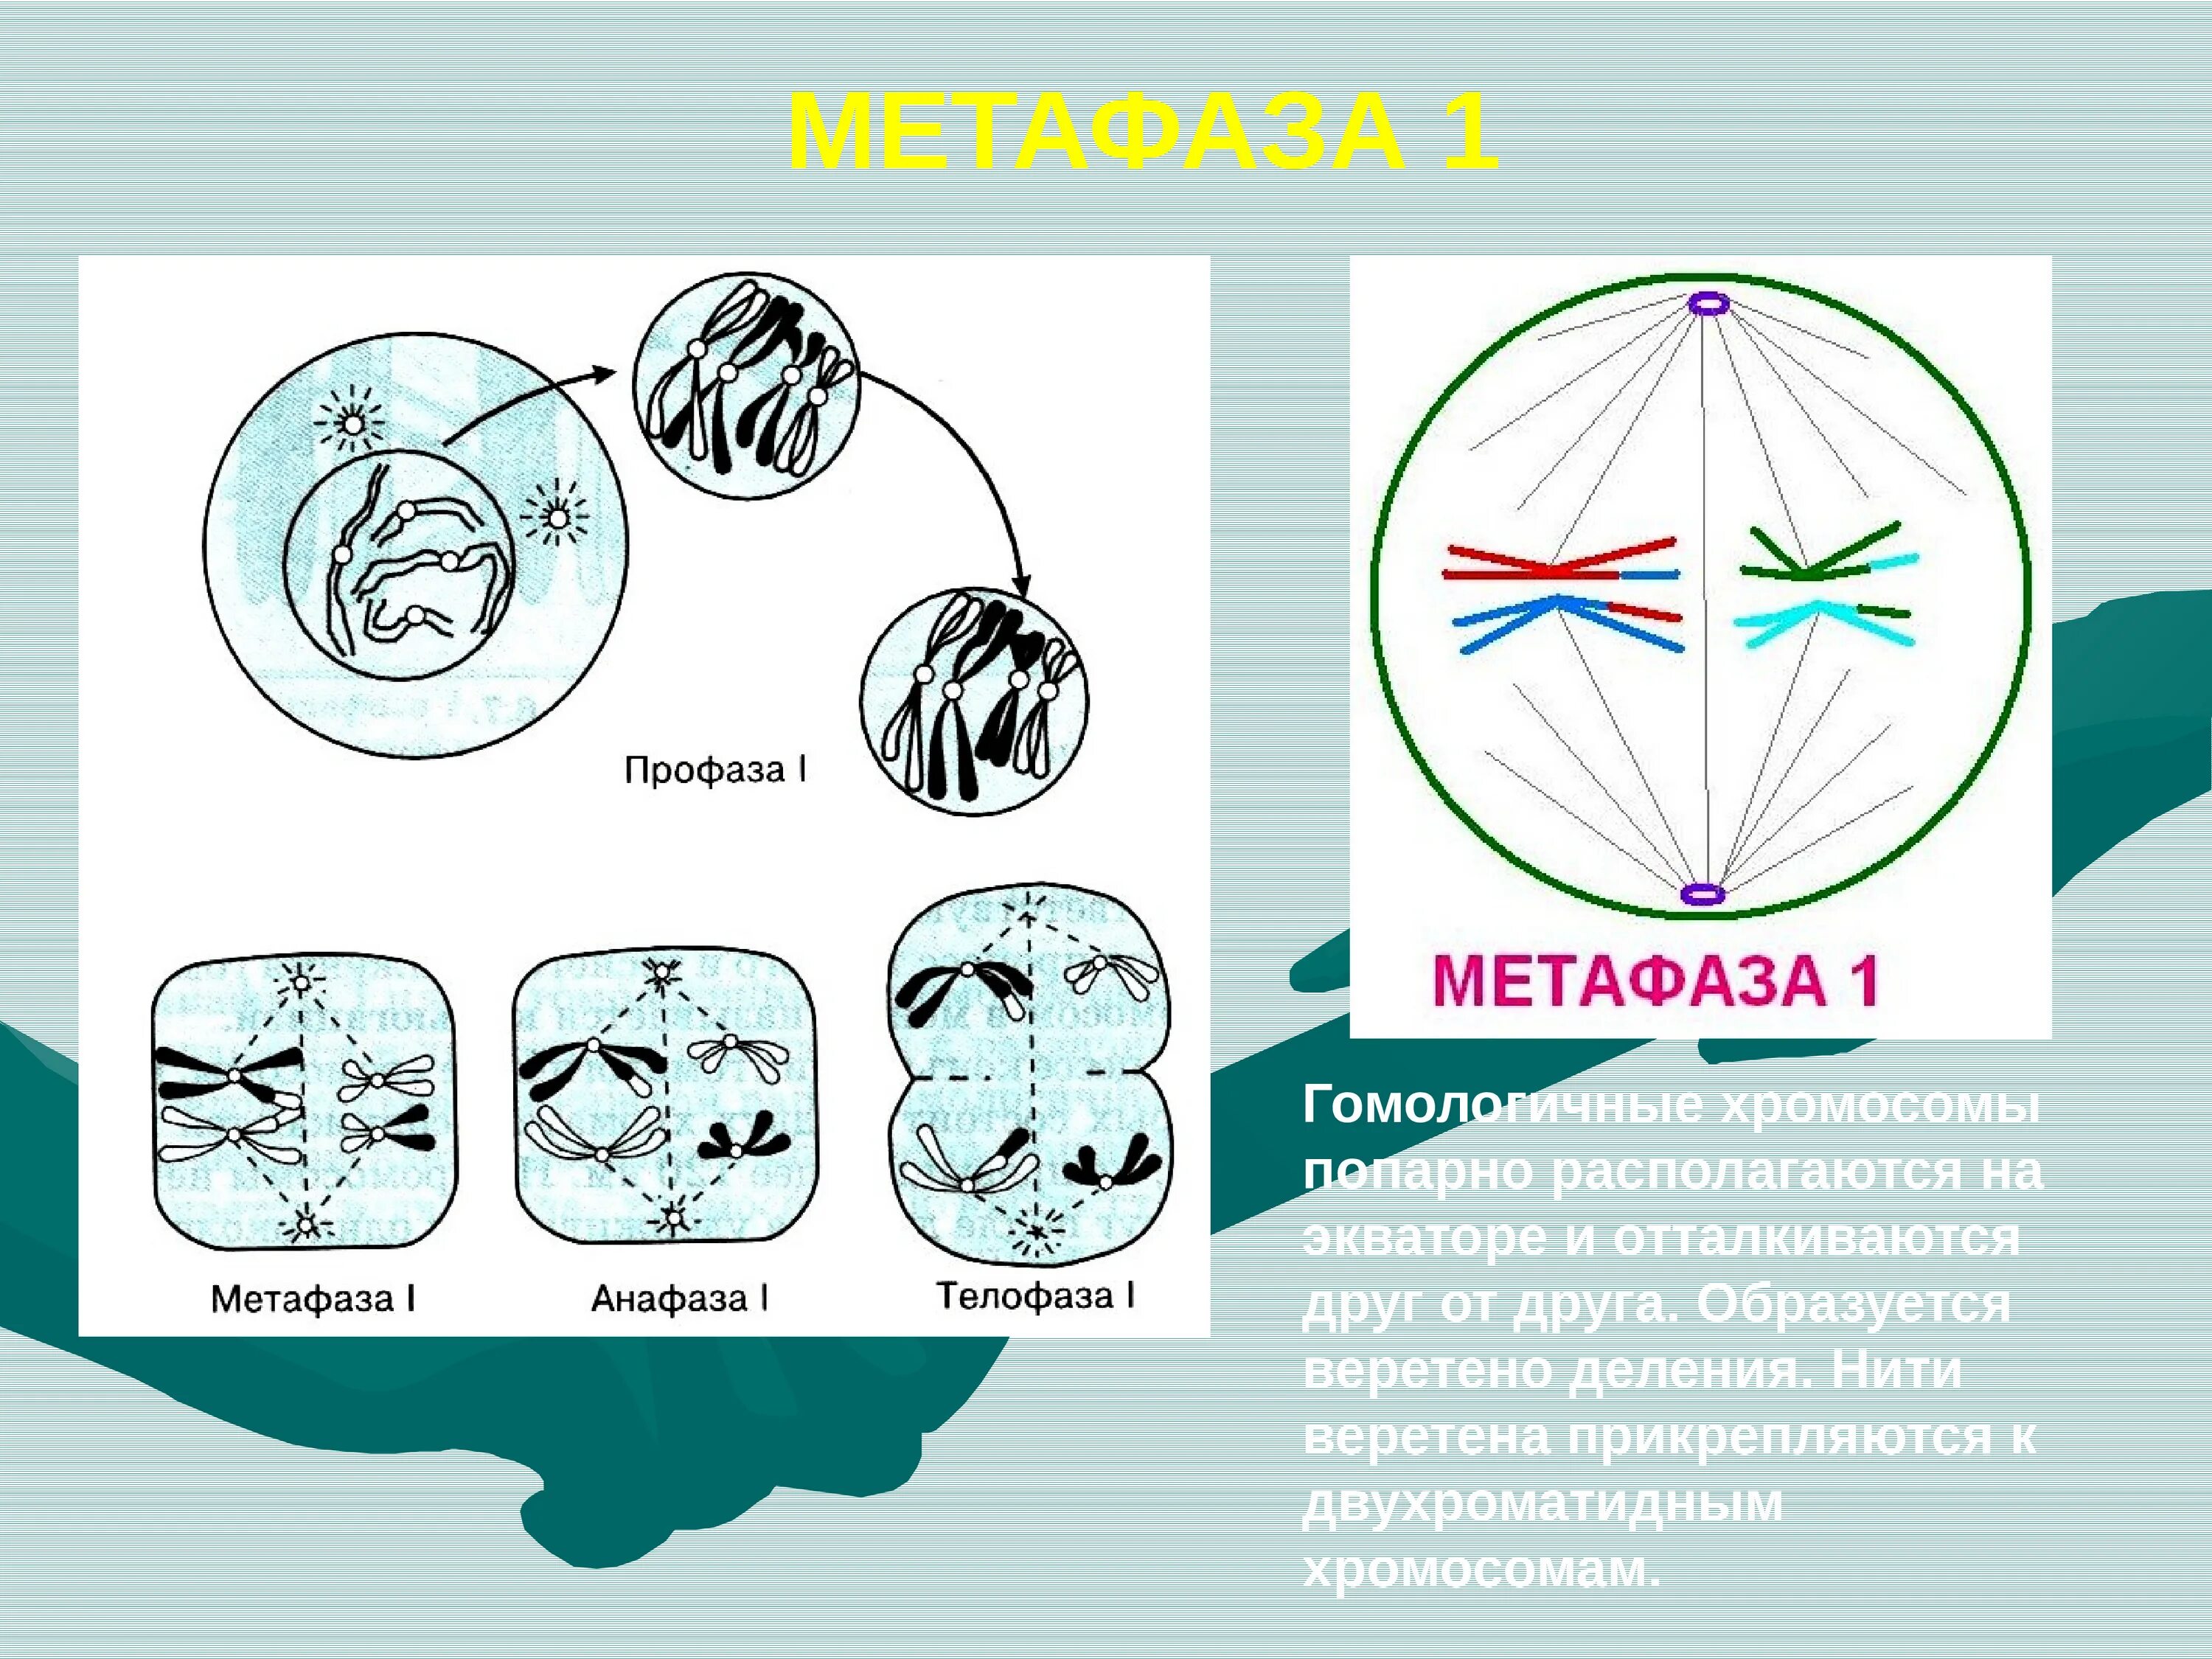 В профазе происходит спирализация хромосом. Метафаза мейоза 2. Метафаза нити веретена деления. Метафаза мейоза 1. Метафаза Веретено деления.